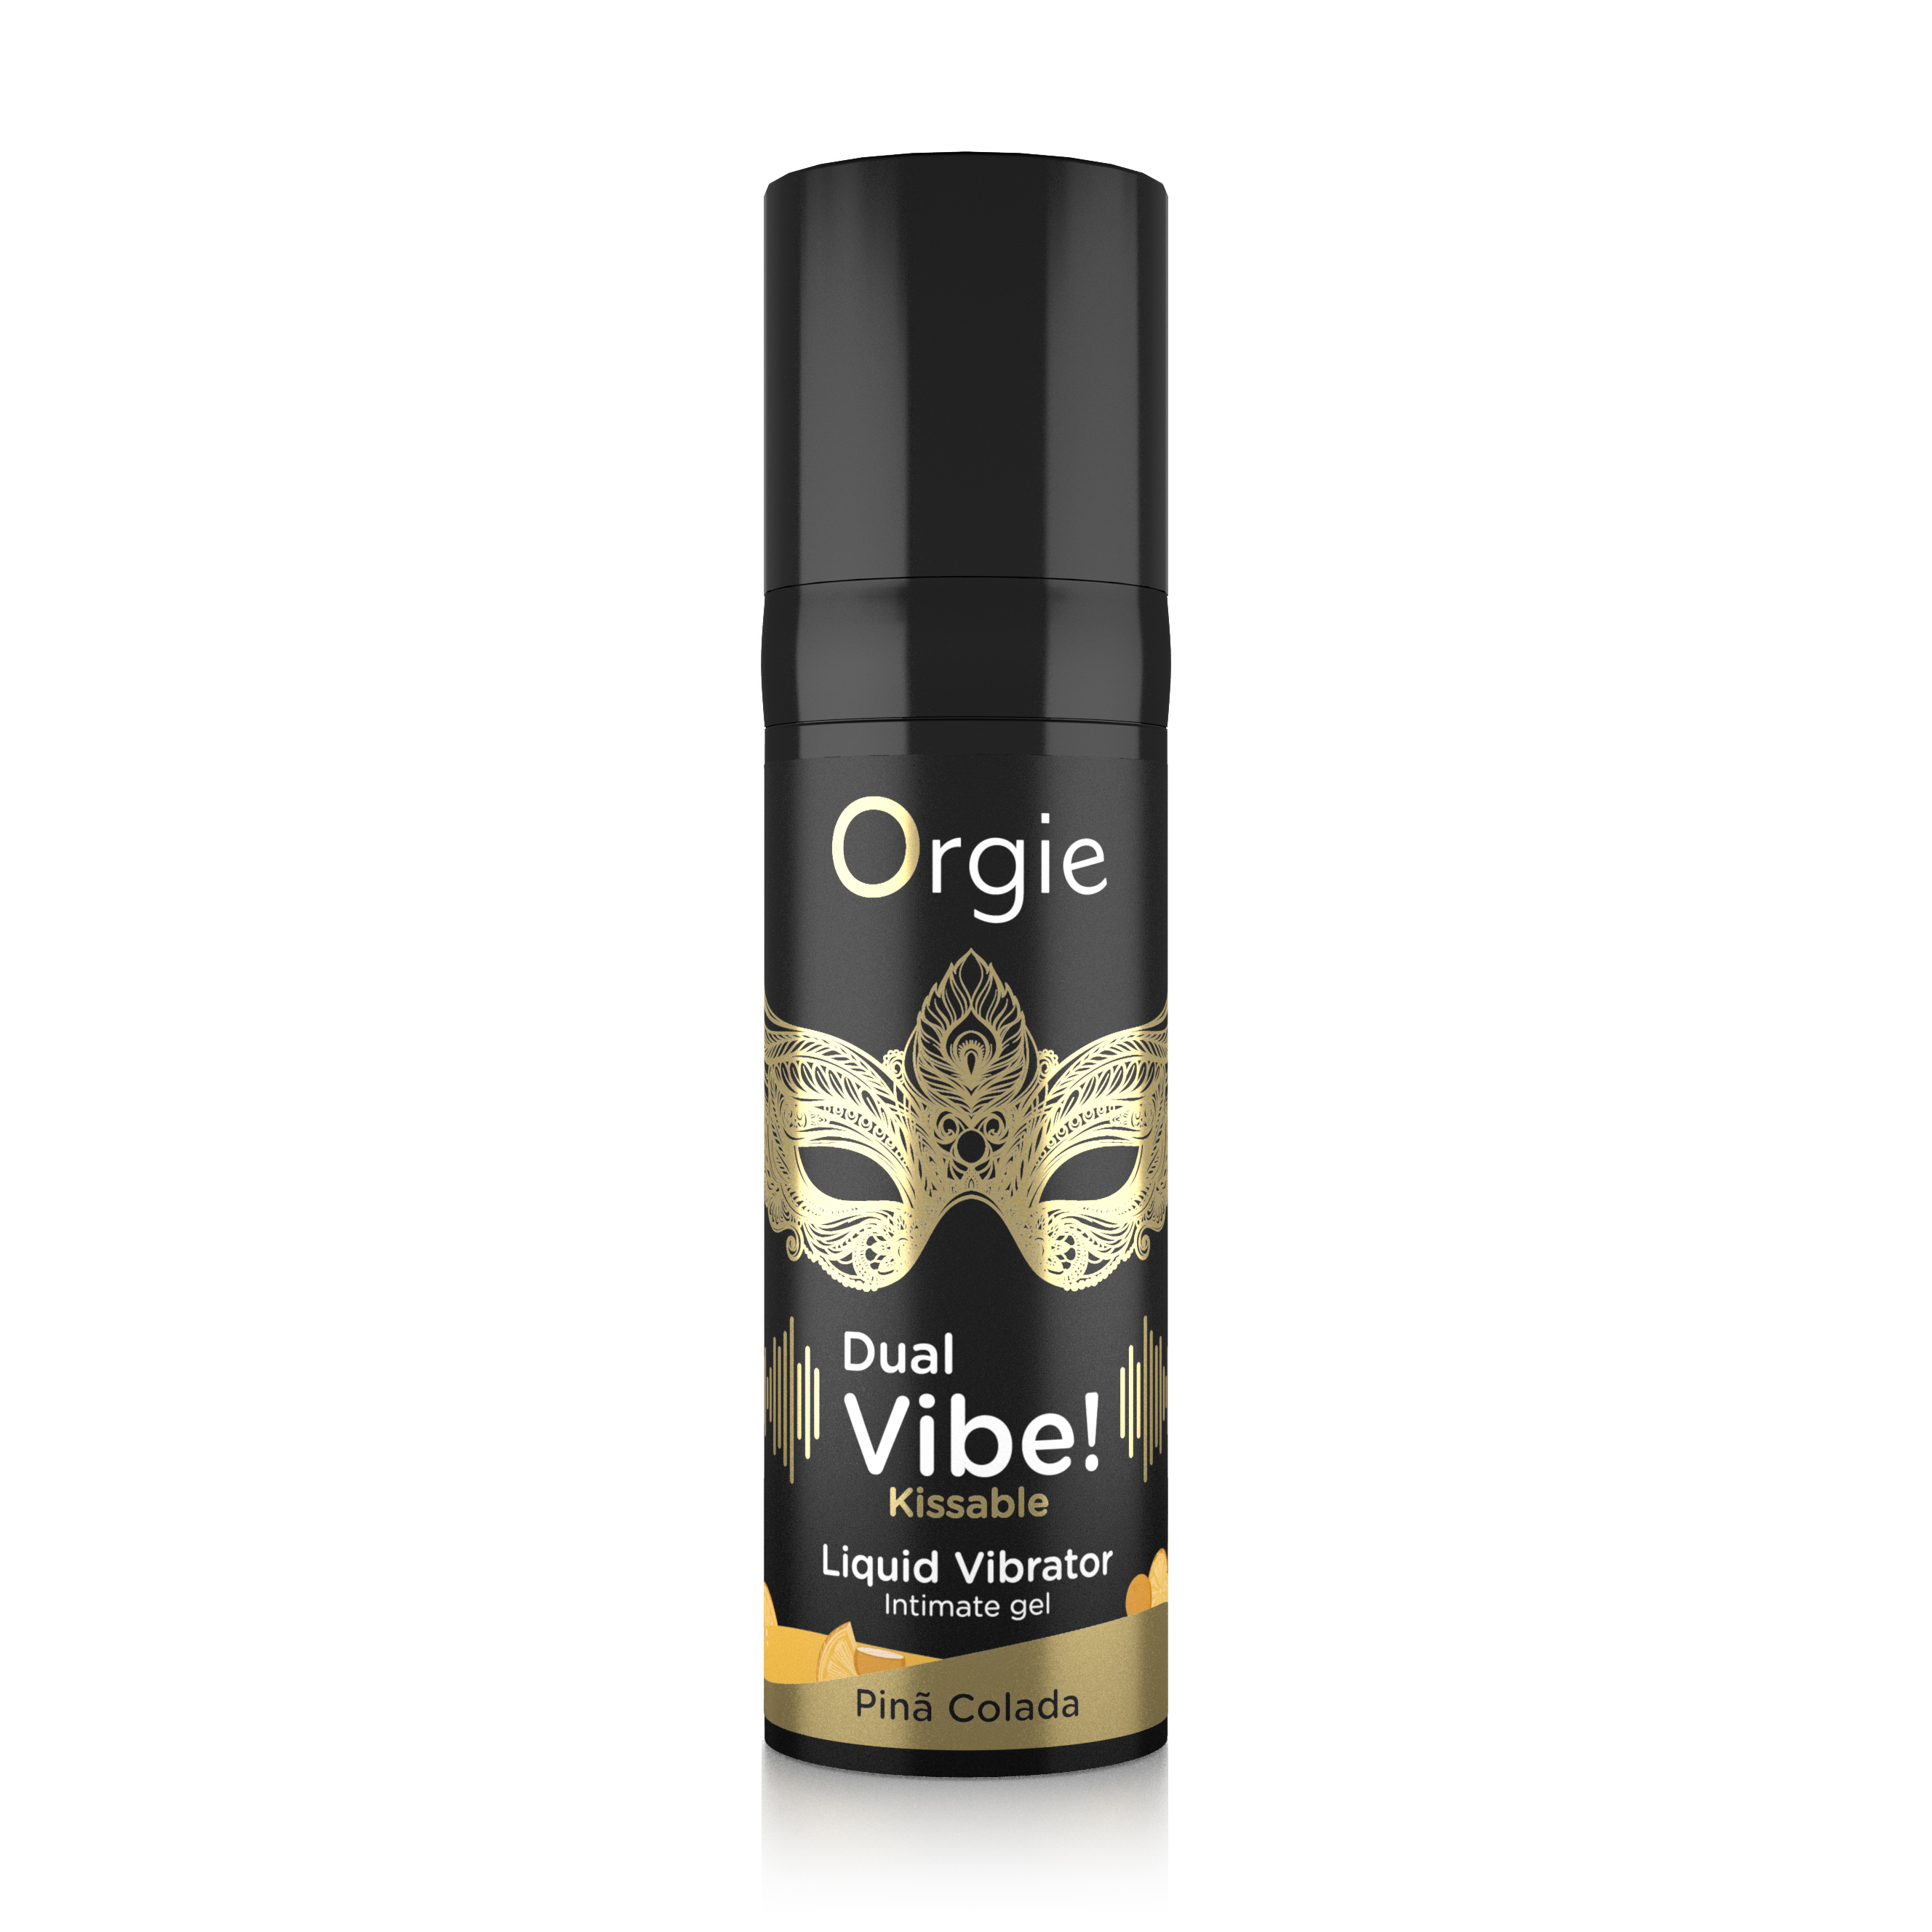 ORGIE Dual Vibe! Pina Colada Kissable Liquid Vibrator